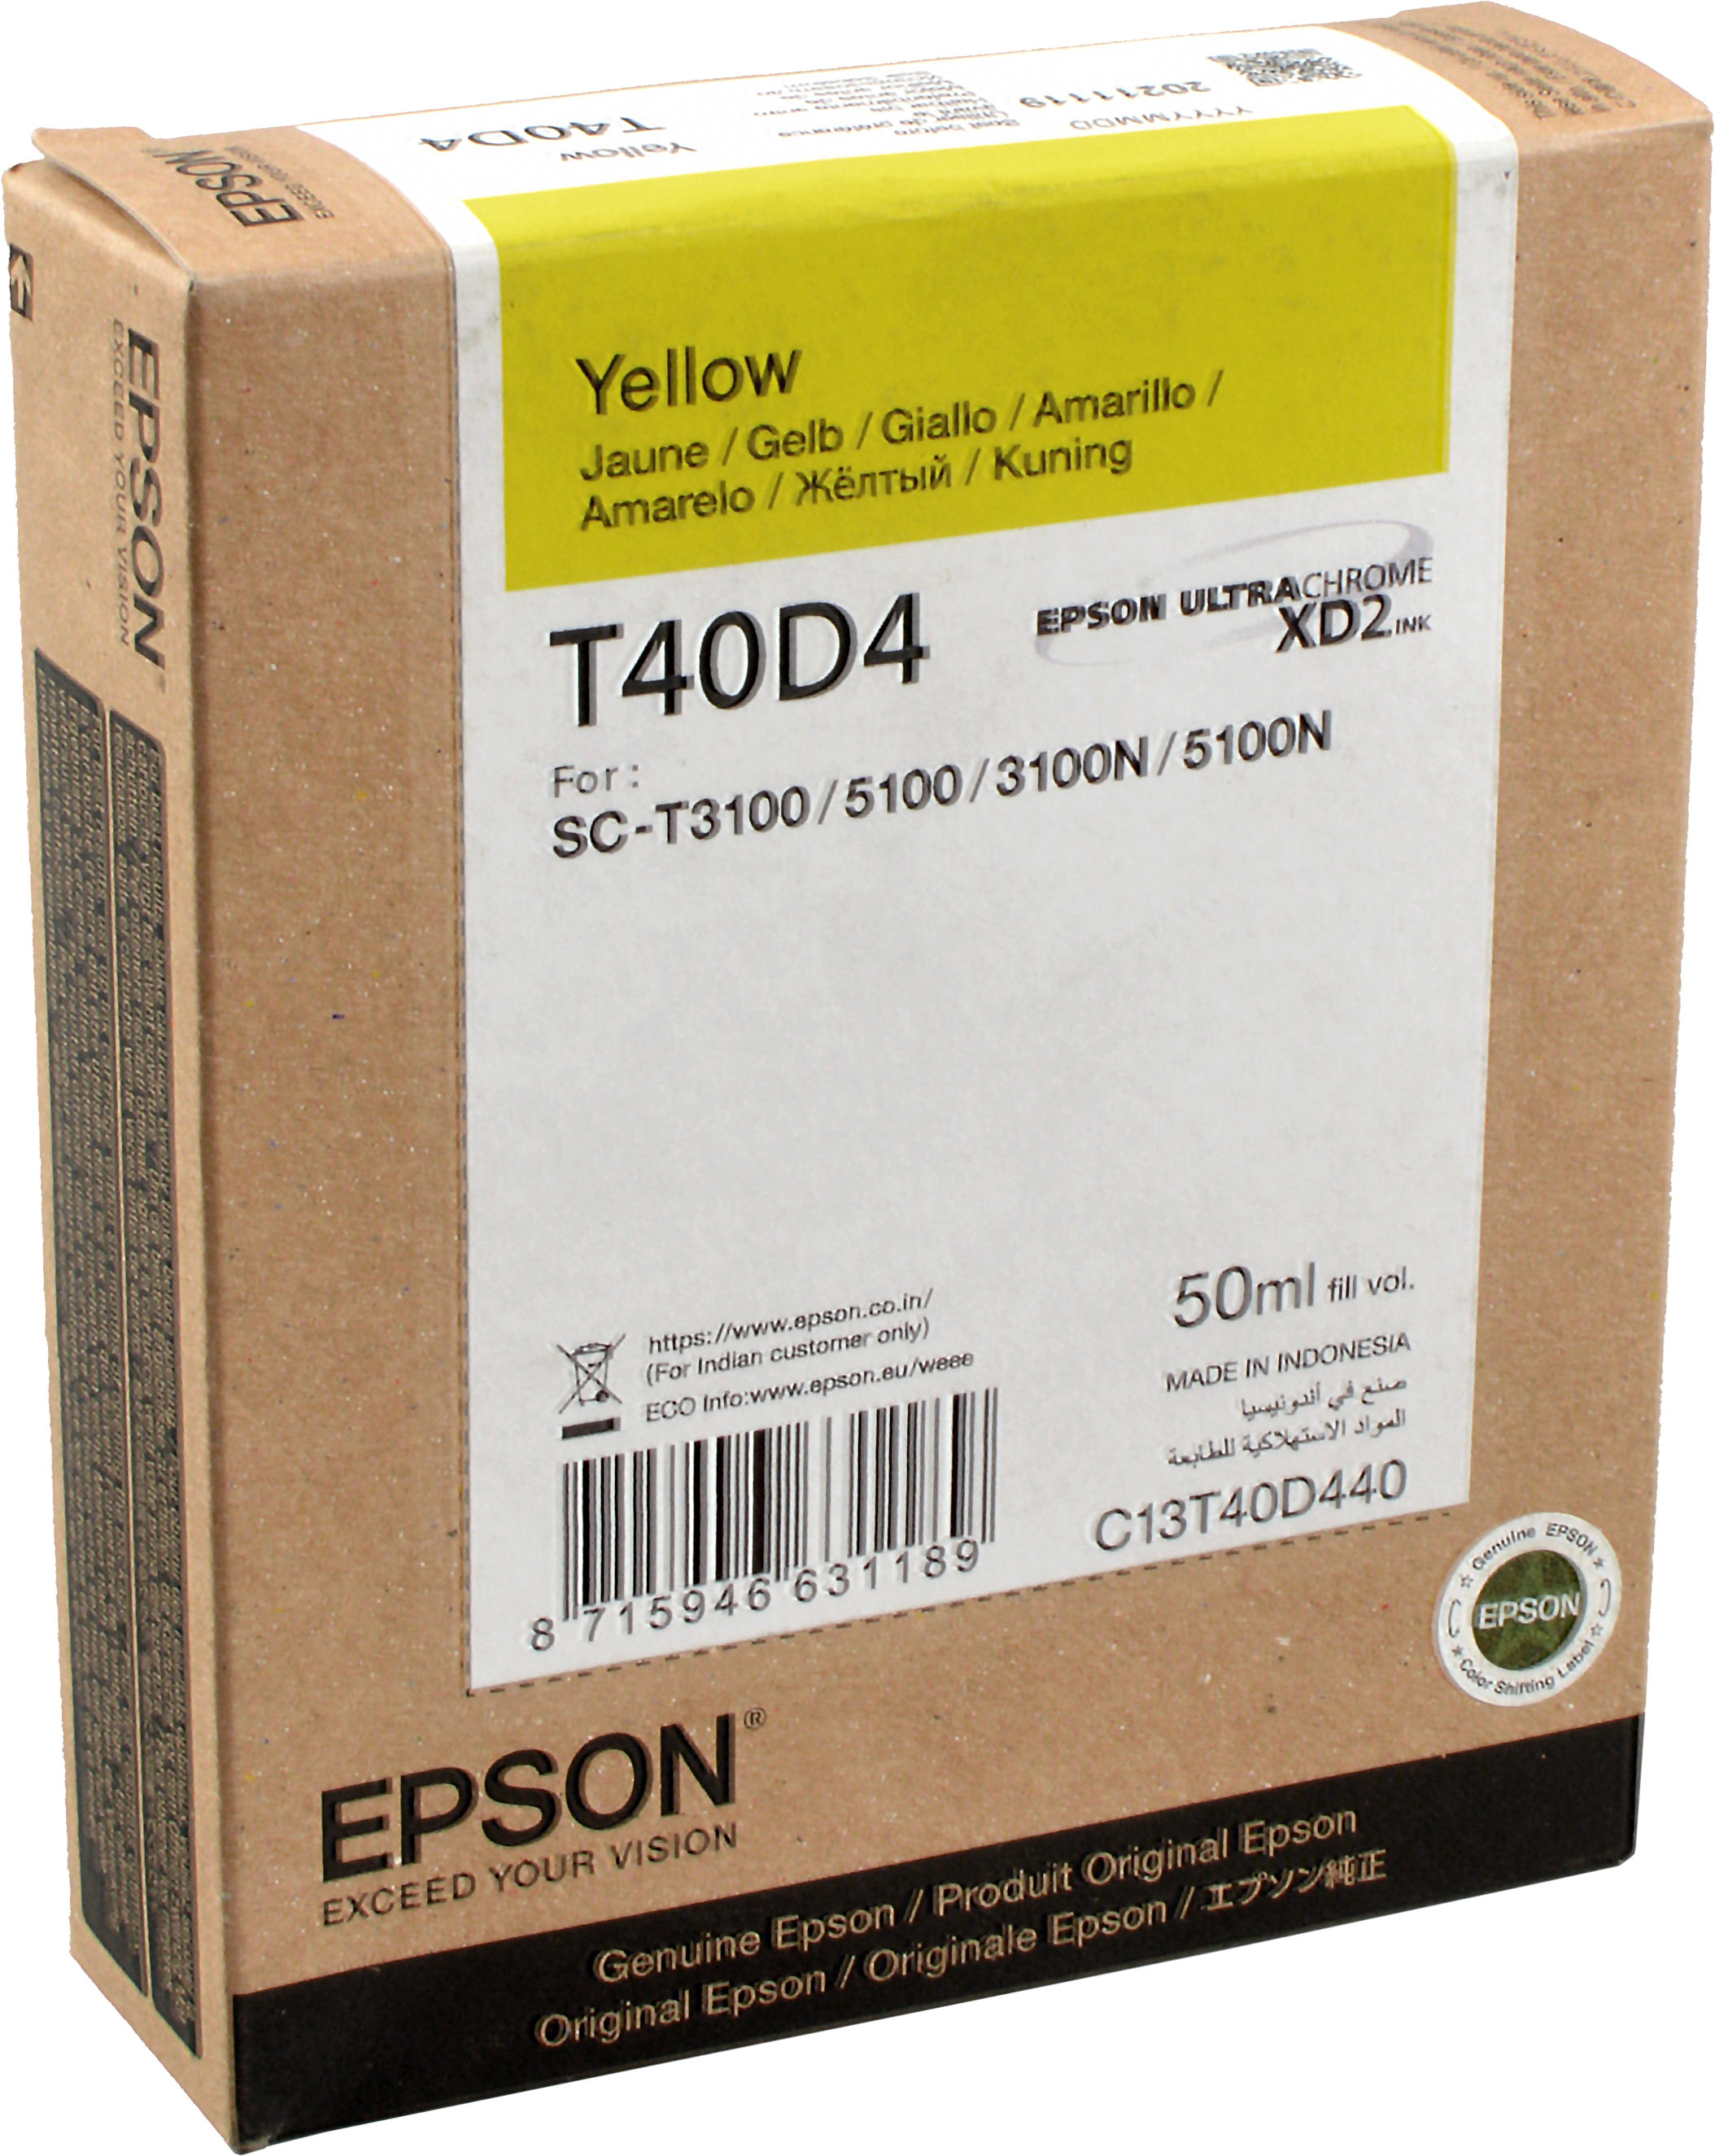 Epson Tinte C13T40D440  Yellow  T40D4